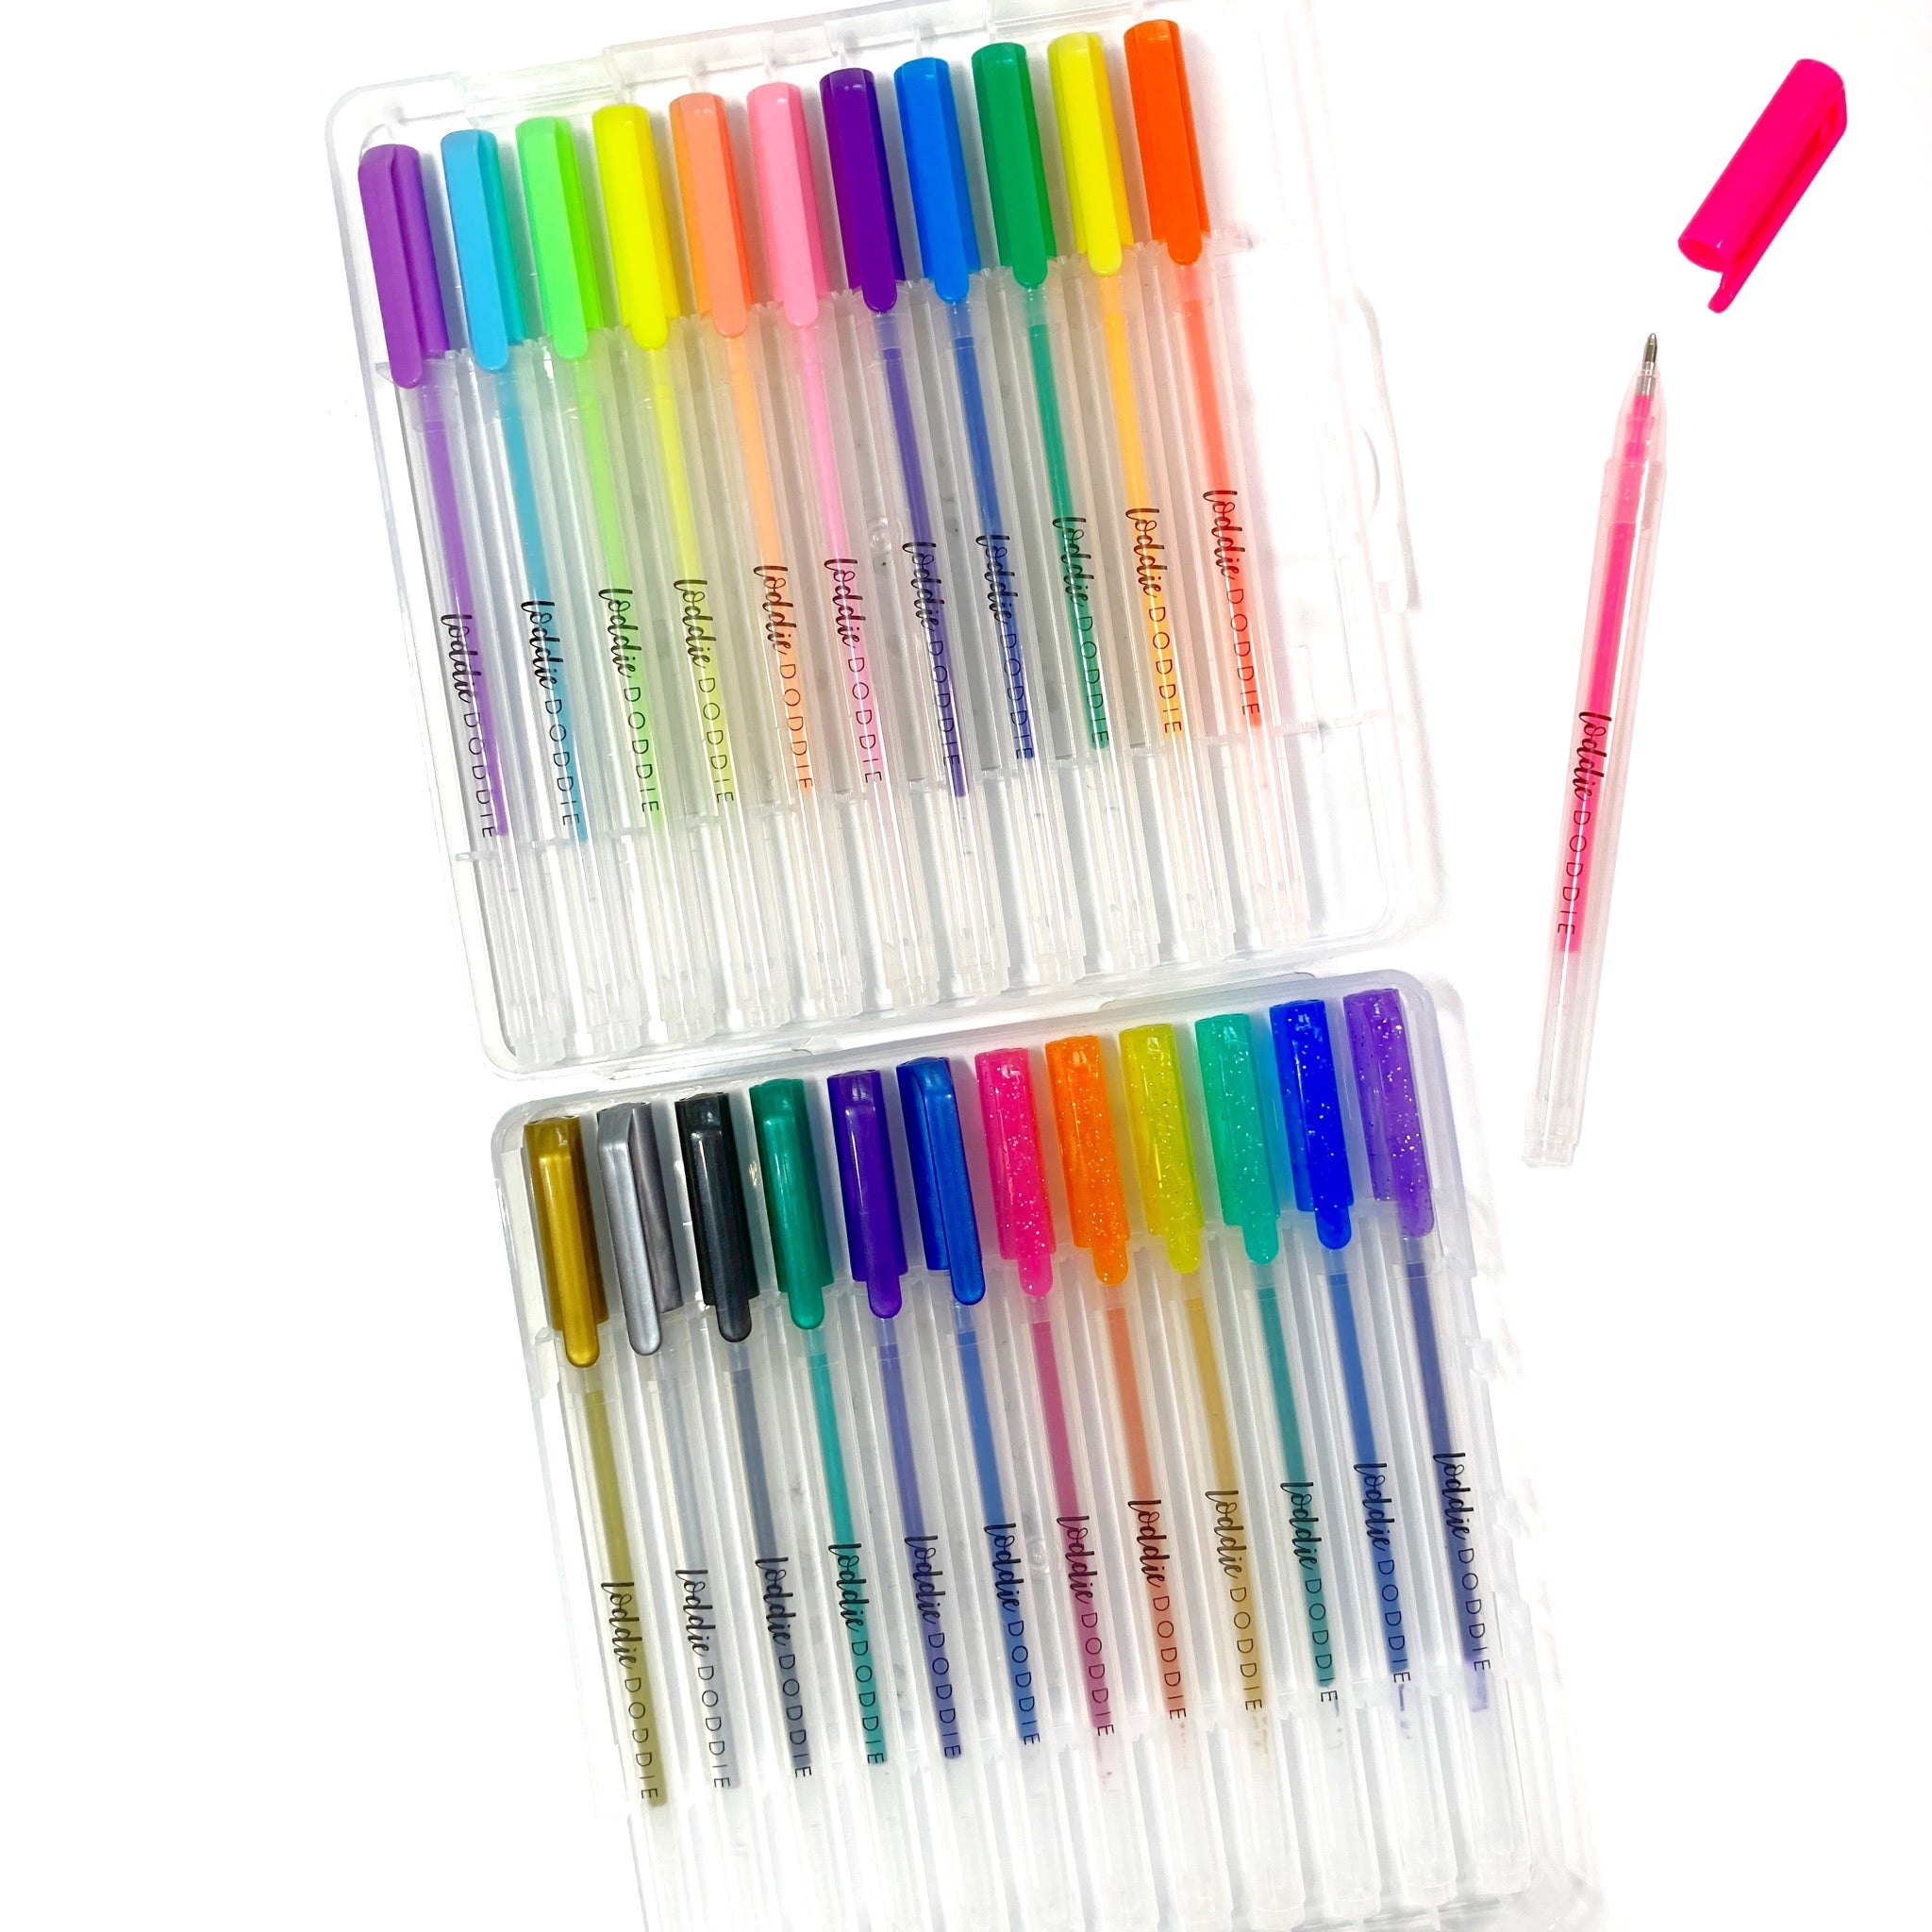 Loddie Doddie Colored Gel Pens for Note Taking, Ballpoint Ink Gel Pens with 1mm Tip, 24-Pack Colored Pens in 6 Neon, Metallic